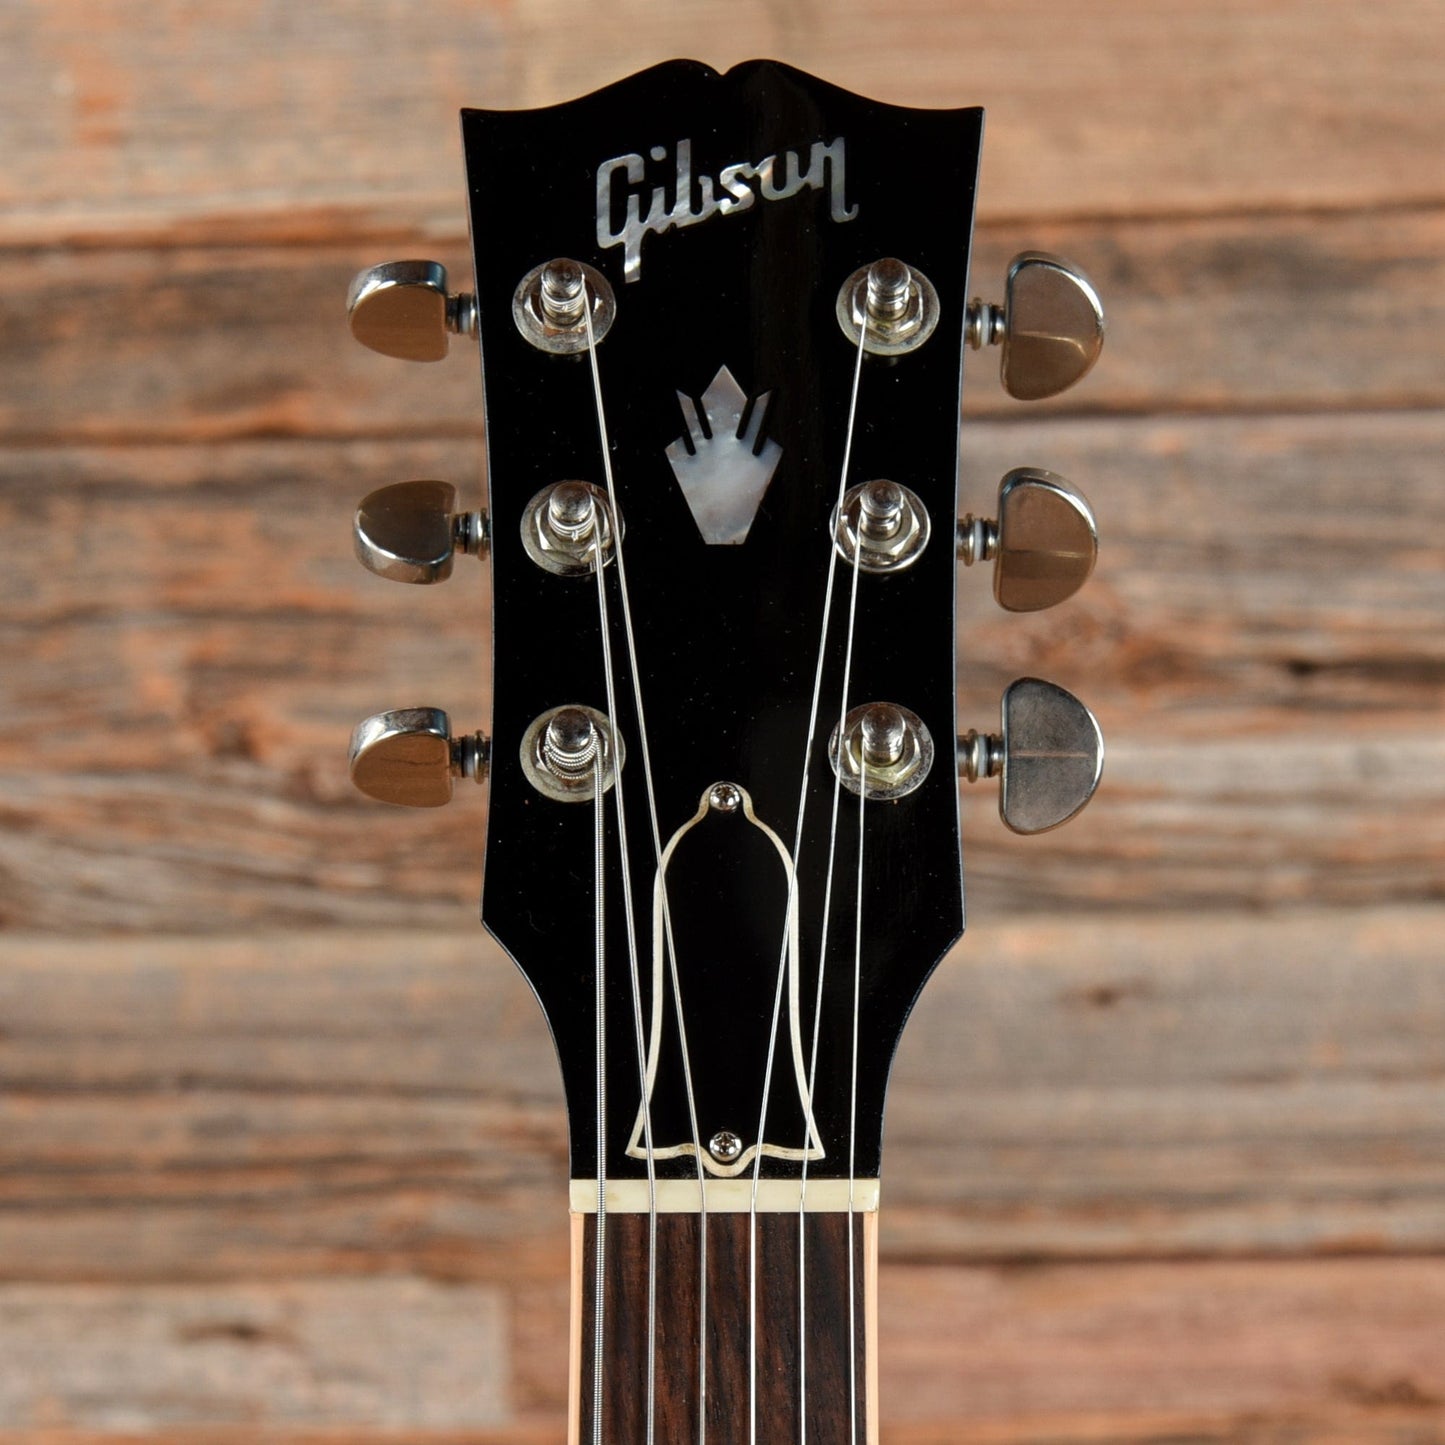 Gibson Memphis CME Exclusive ES-335 Harbor Blue 2019 Electric Guitars / Semi-Hollow